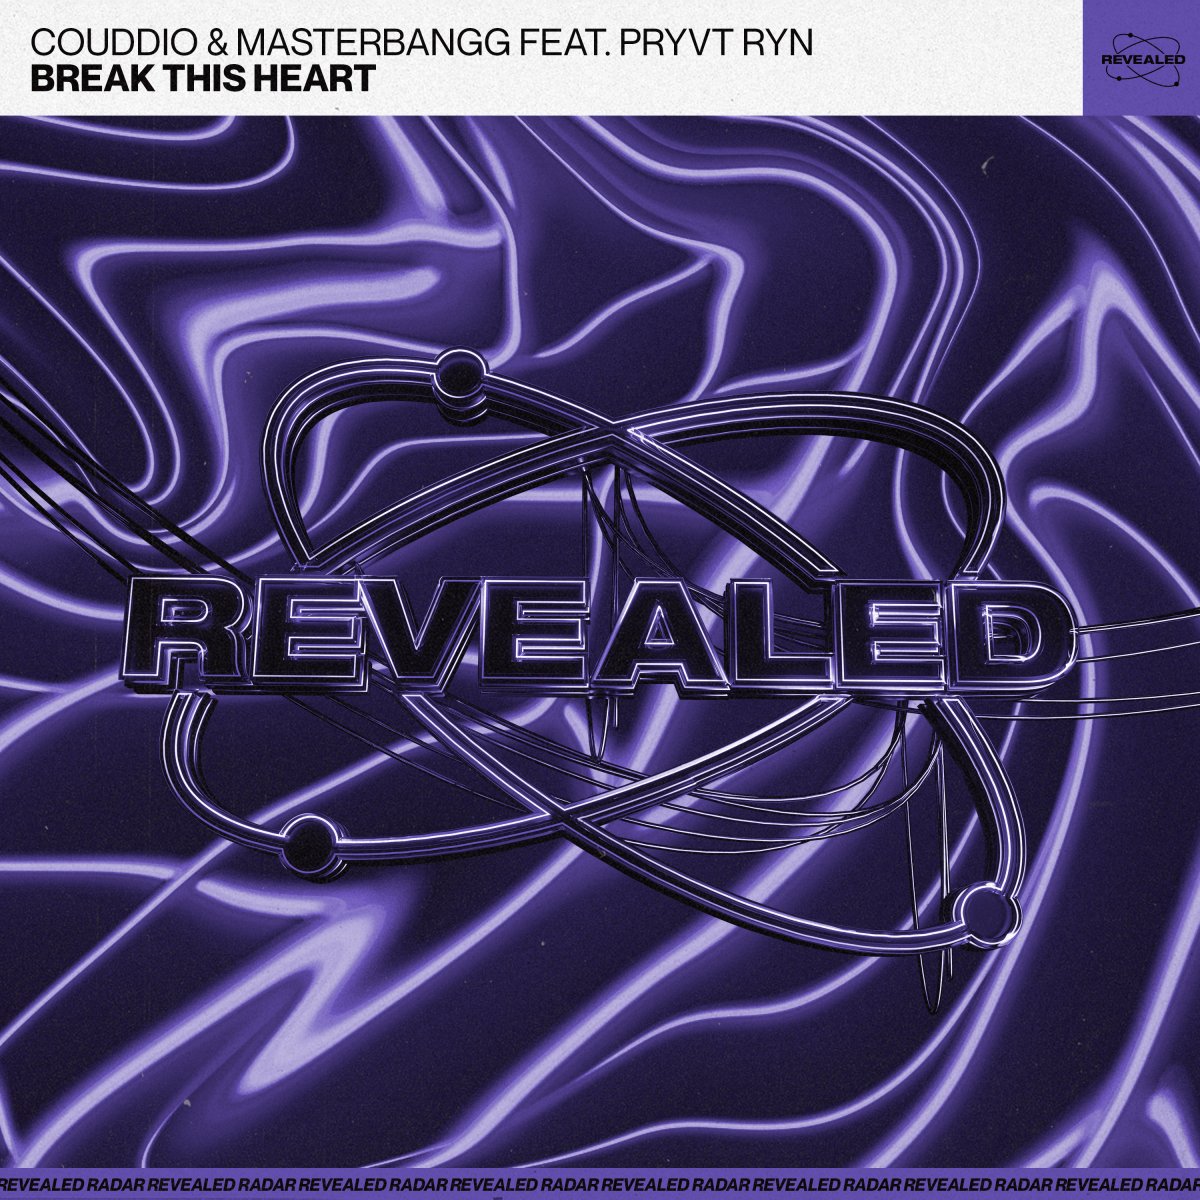 Break This Heart - Couddio ⁠ & MasterBangg⁠ feat. PRYVT RYN⁠ 